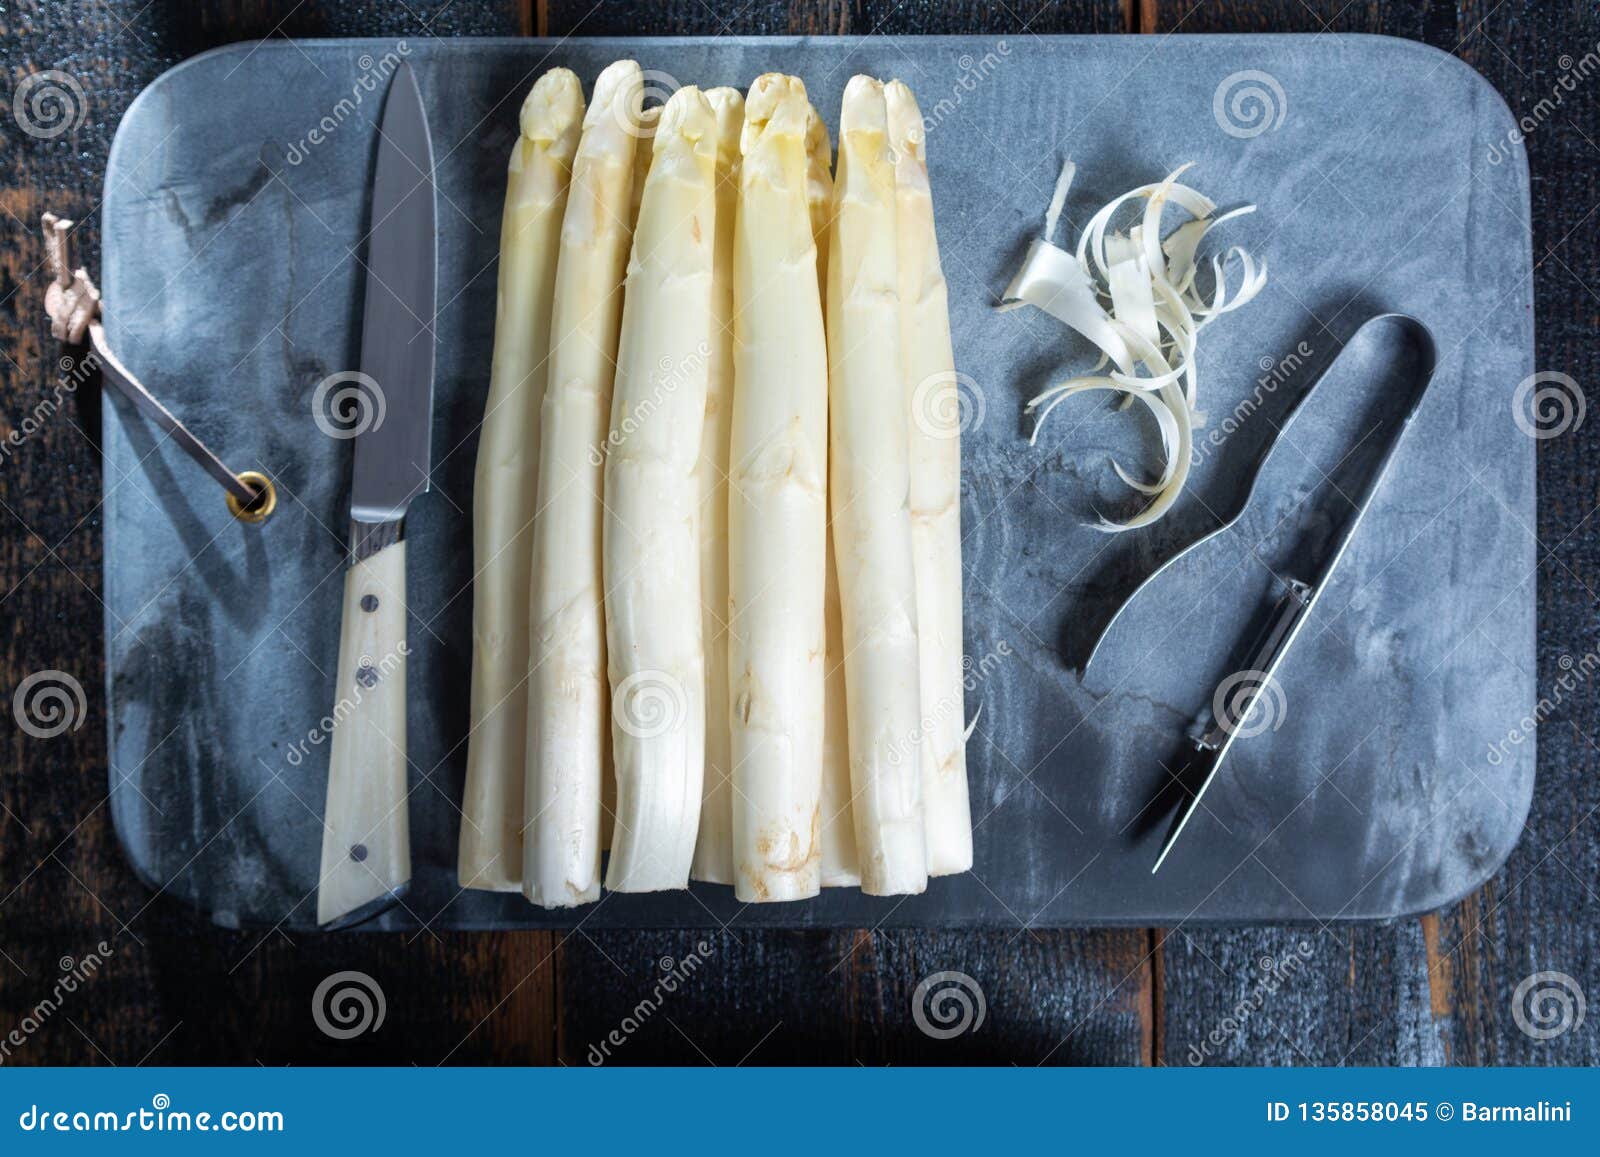 https://thumbs.dreamstime.com/z/top-view-fresh-tasty-white-asparagus-seasonal-vegetable-new-harvest-piller-knife-ready-to-cook-top-view-fresh-tasty-white-135858045.jpg